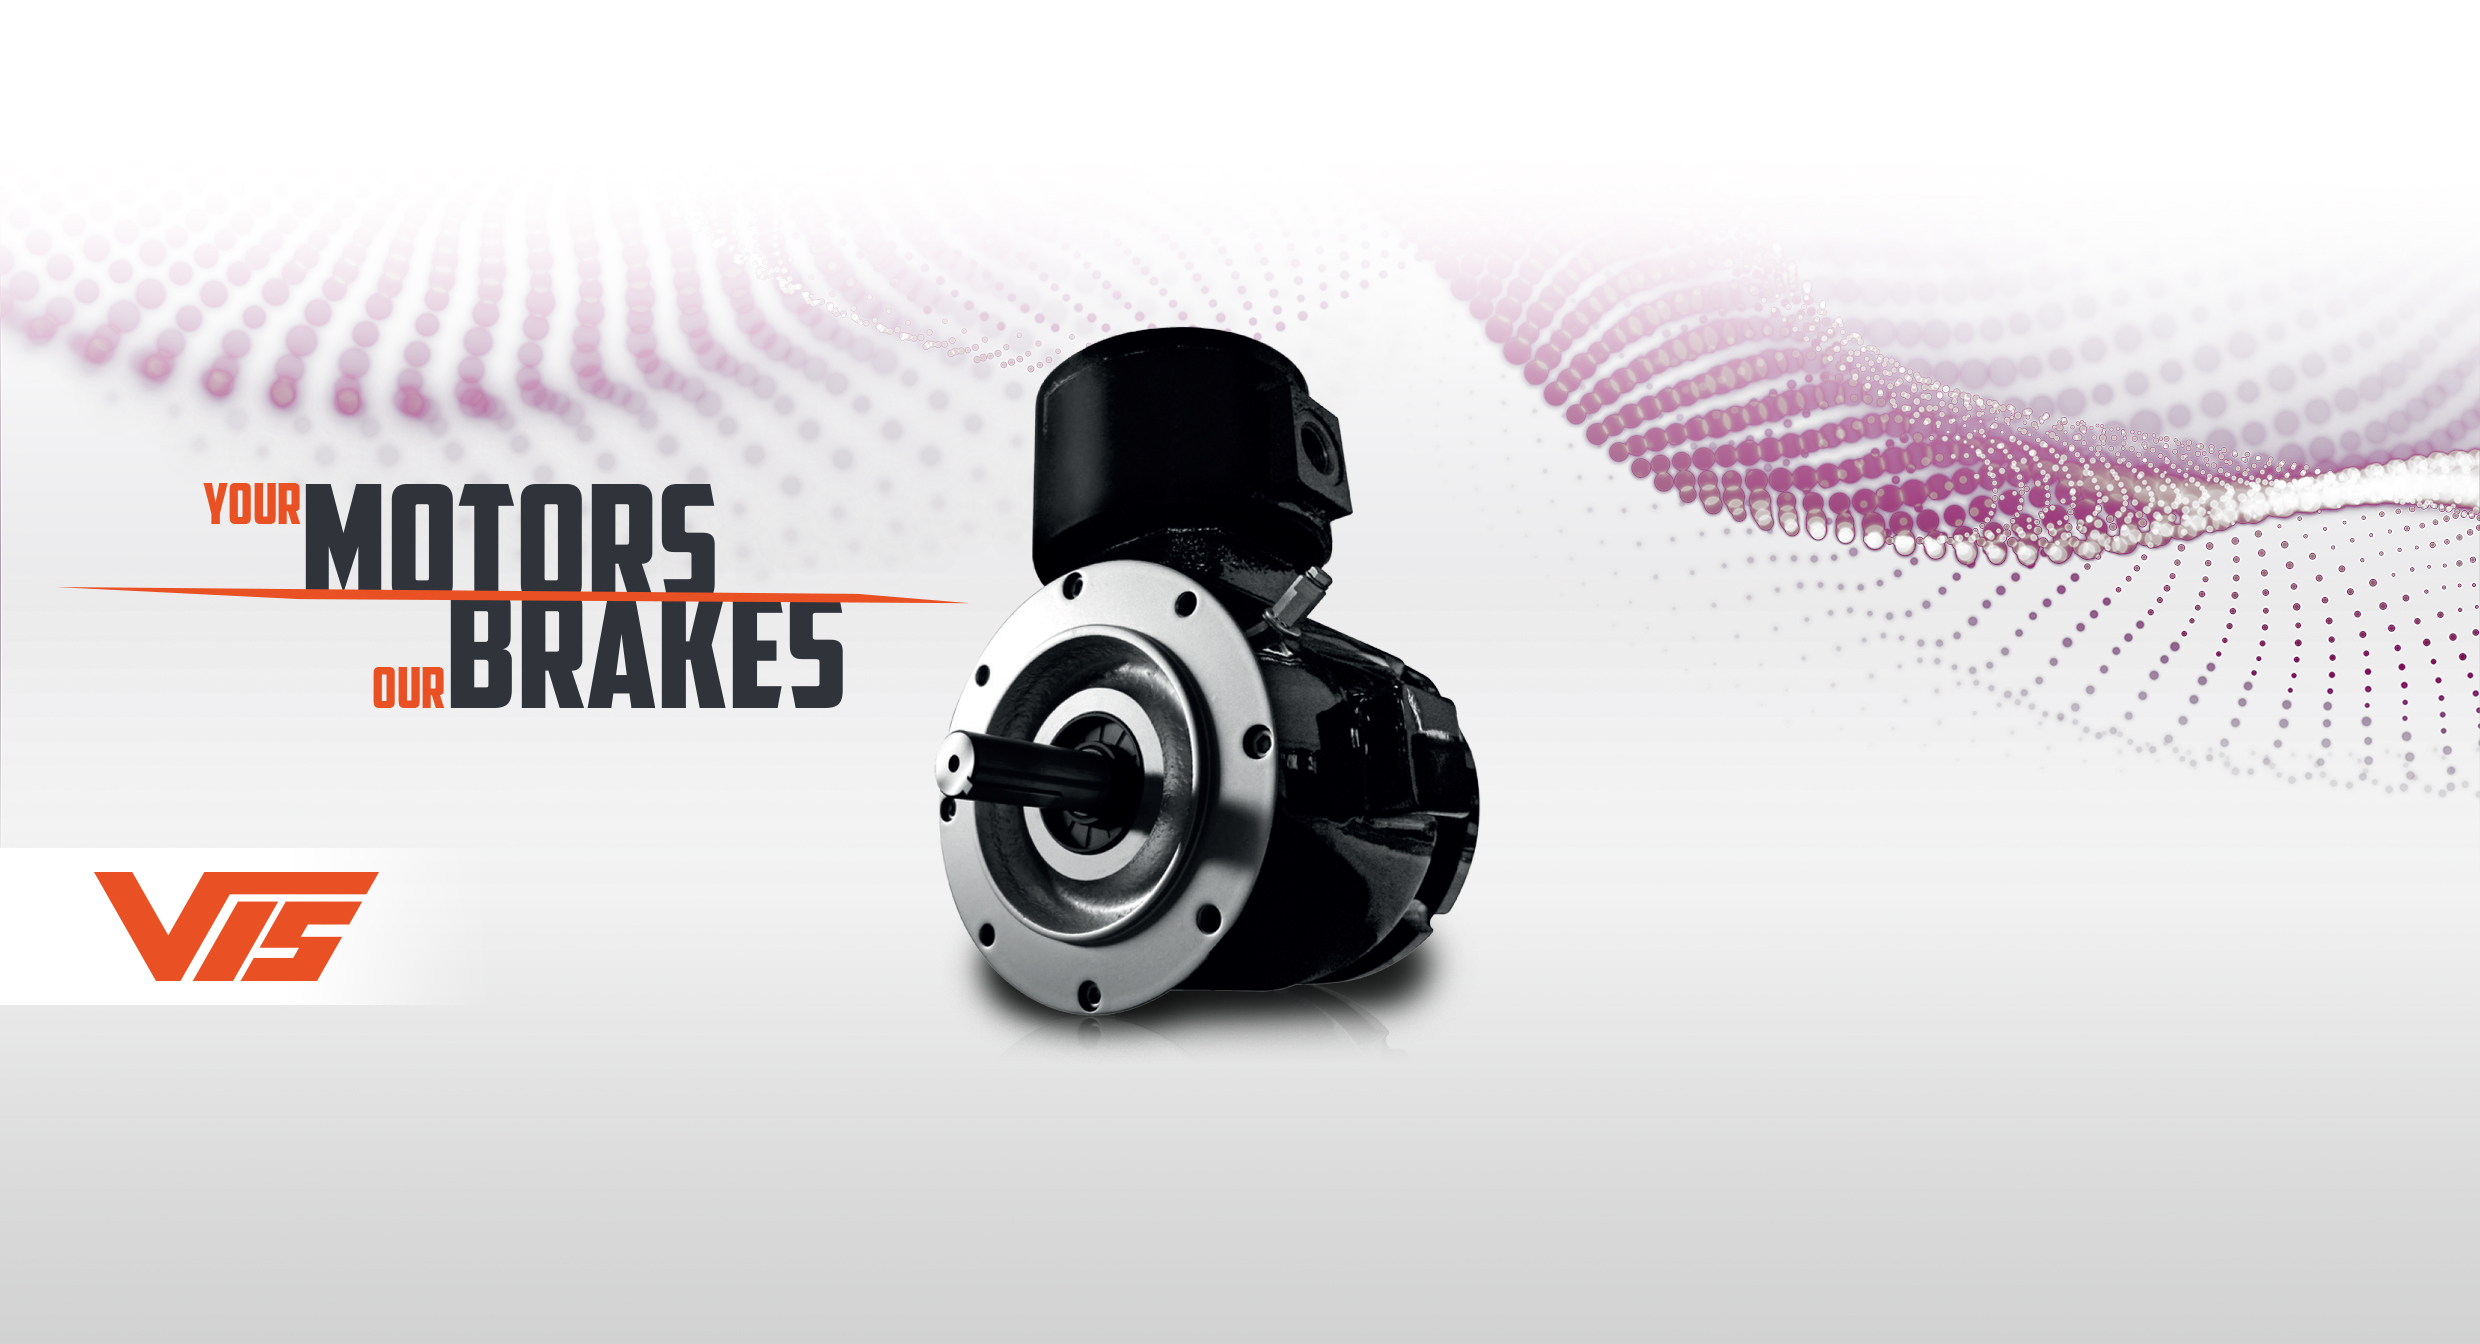 VIS - Spring applied modular brakes